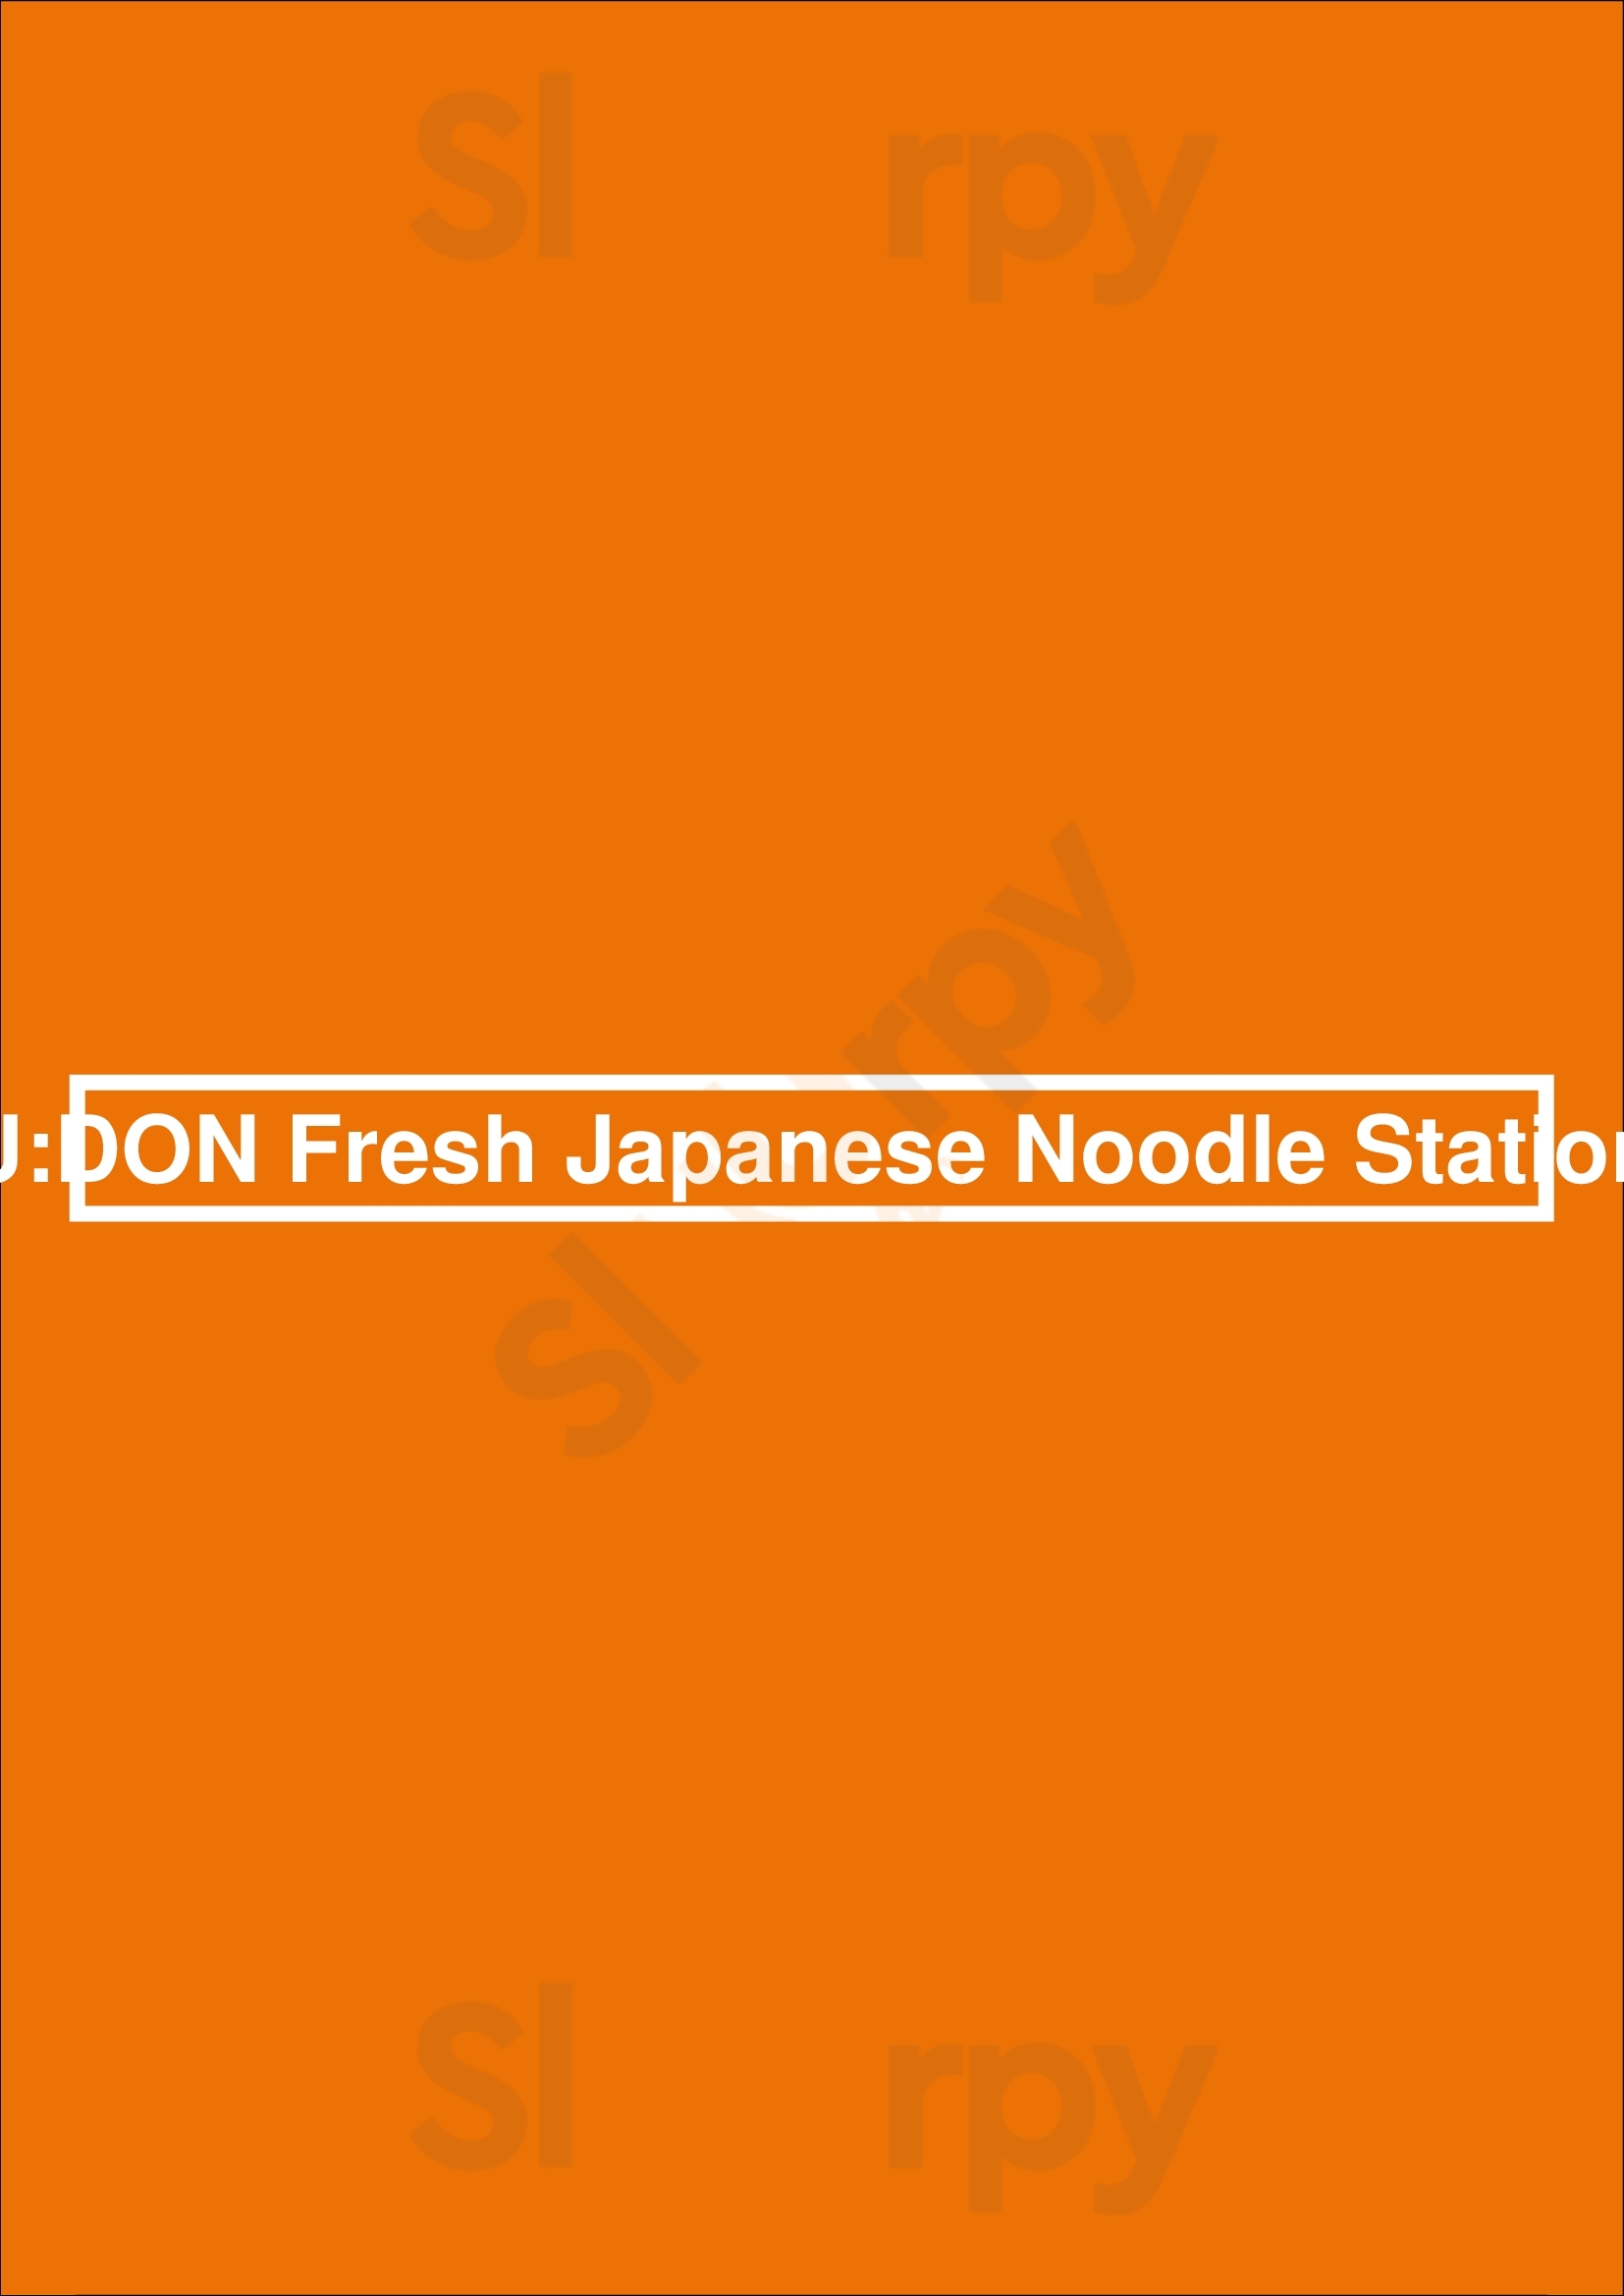 U:don Fresh Japanese Noodle Station Seattle Menu - 1